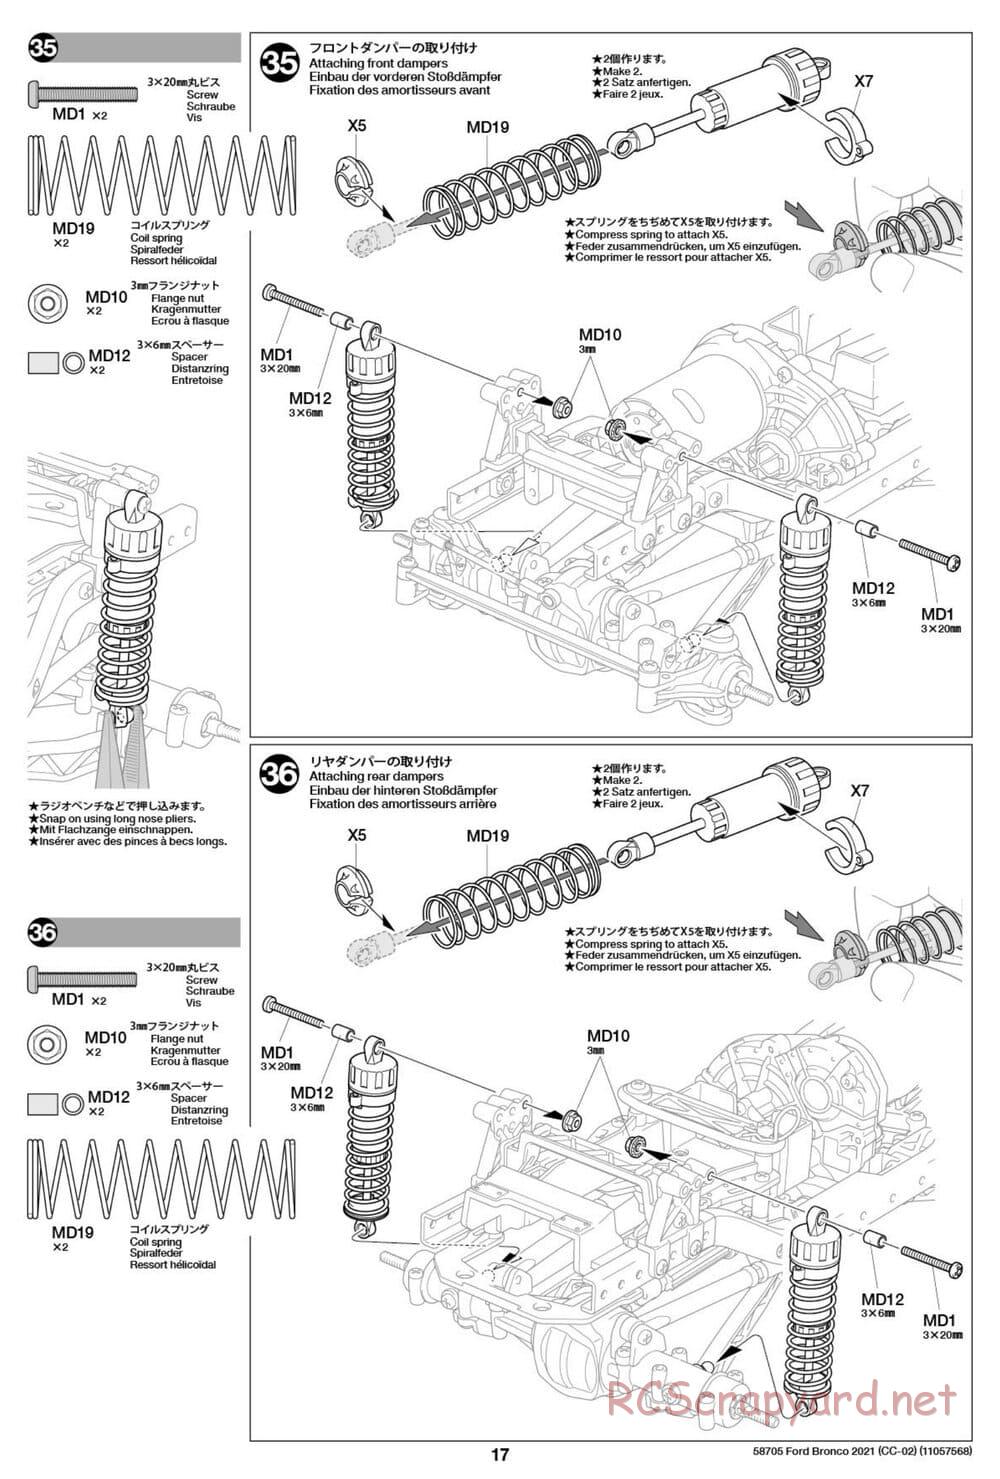 Tamiya - Ford Bronco 2021 - CC-02 Chassis - Manual - Page 17